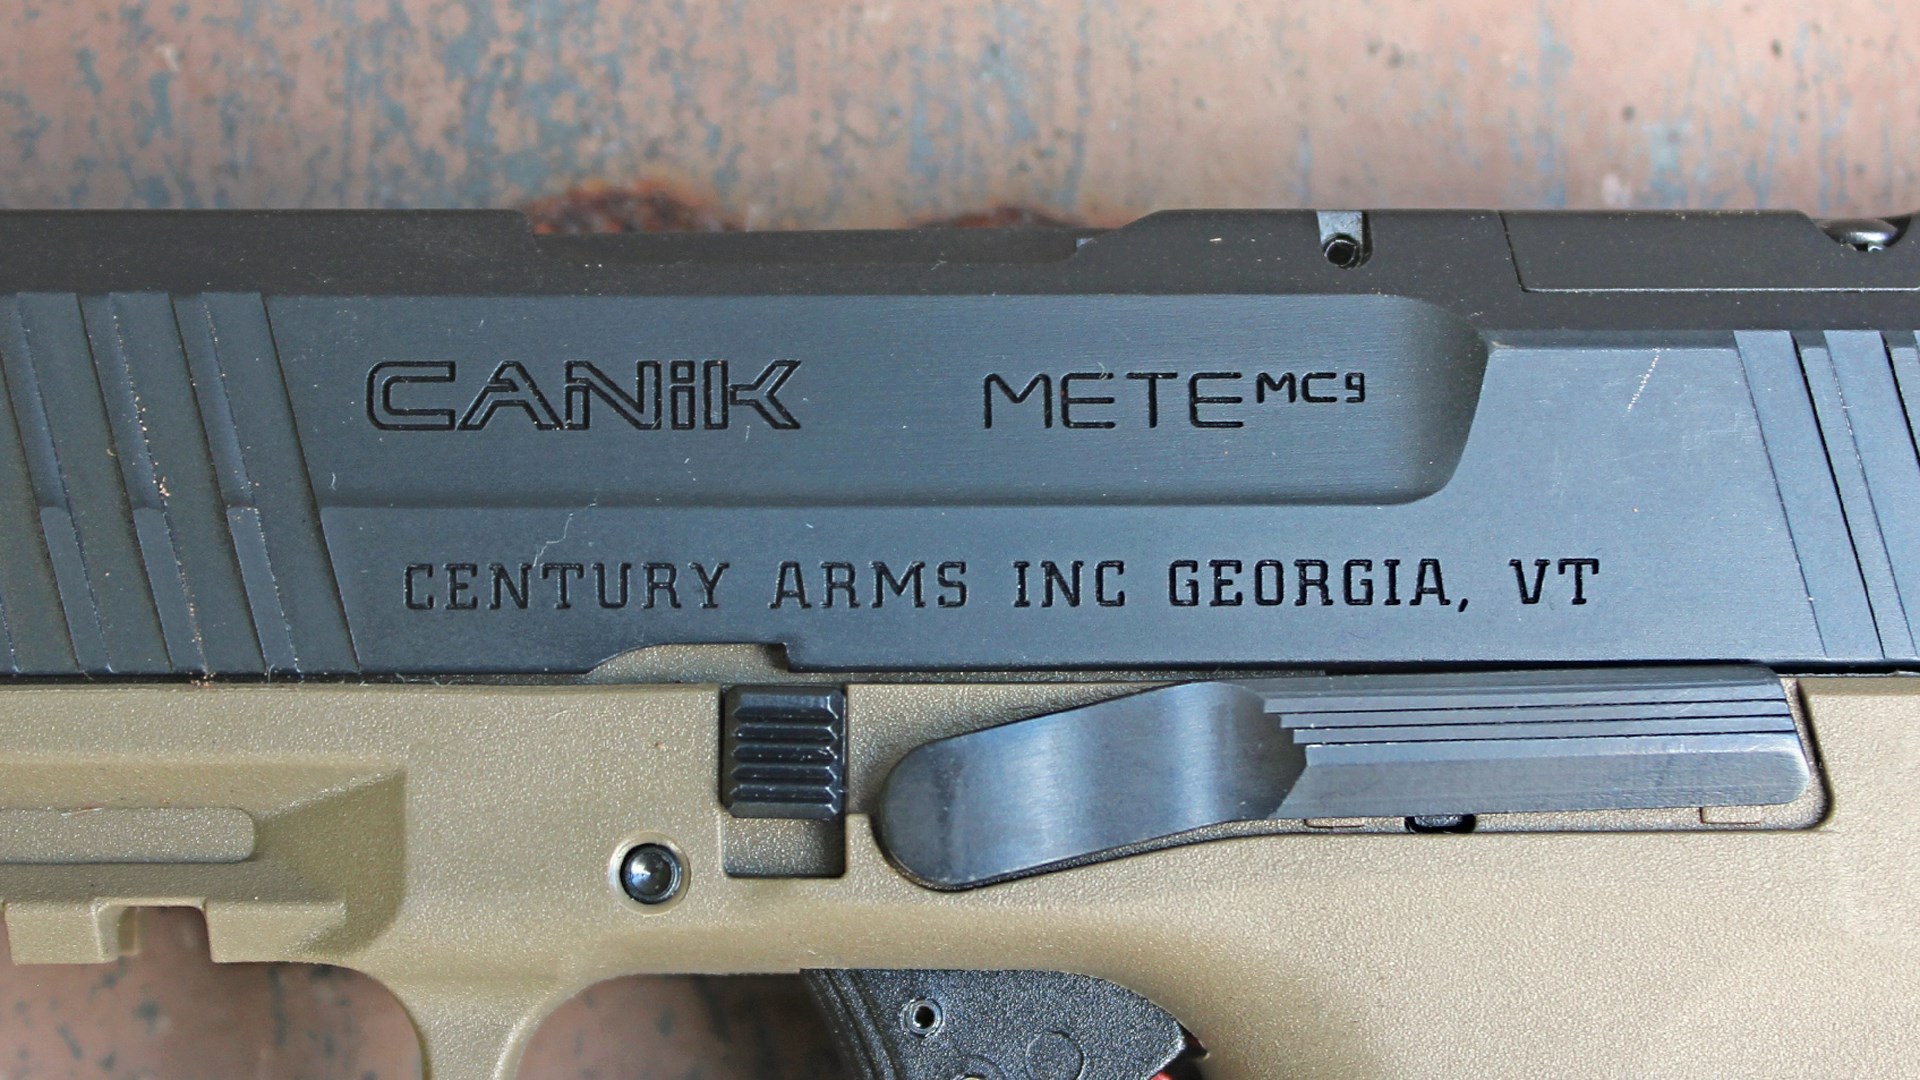 "canik mete mc9 century arms inc georgia, vt" stamping on black steel pistol slide